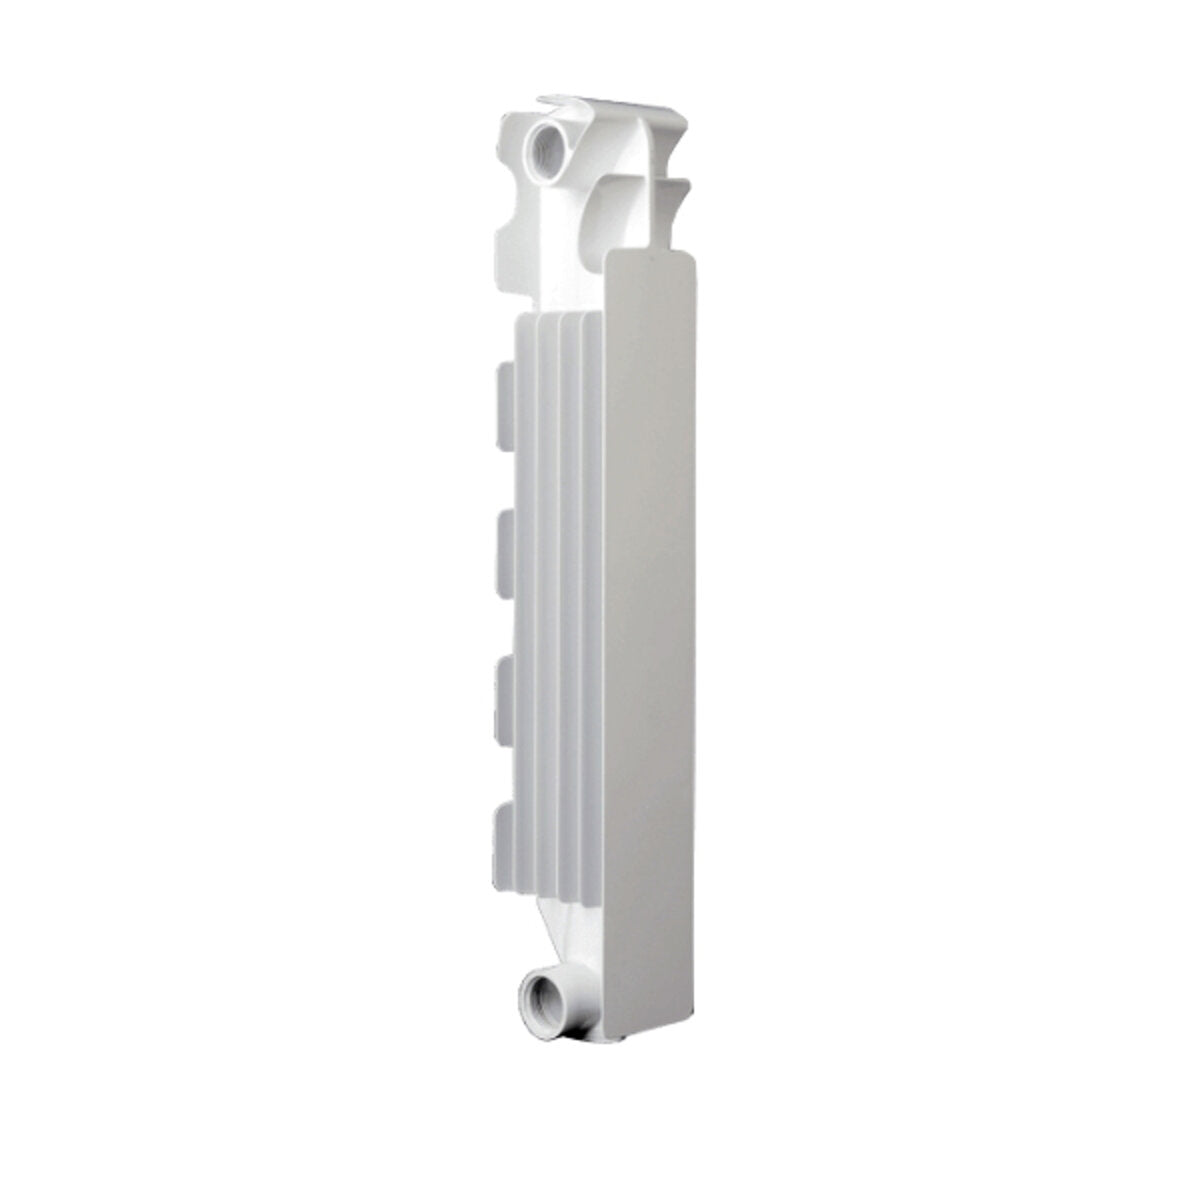 Fondital radiator in die-cast aluminum calidor super b4 single element center distance 600 mm